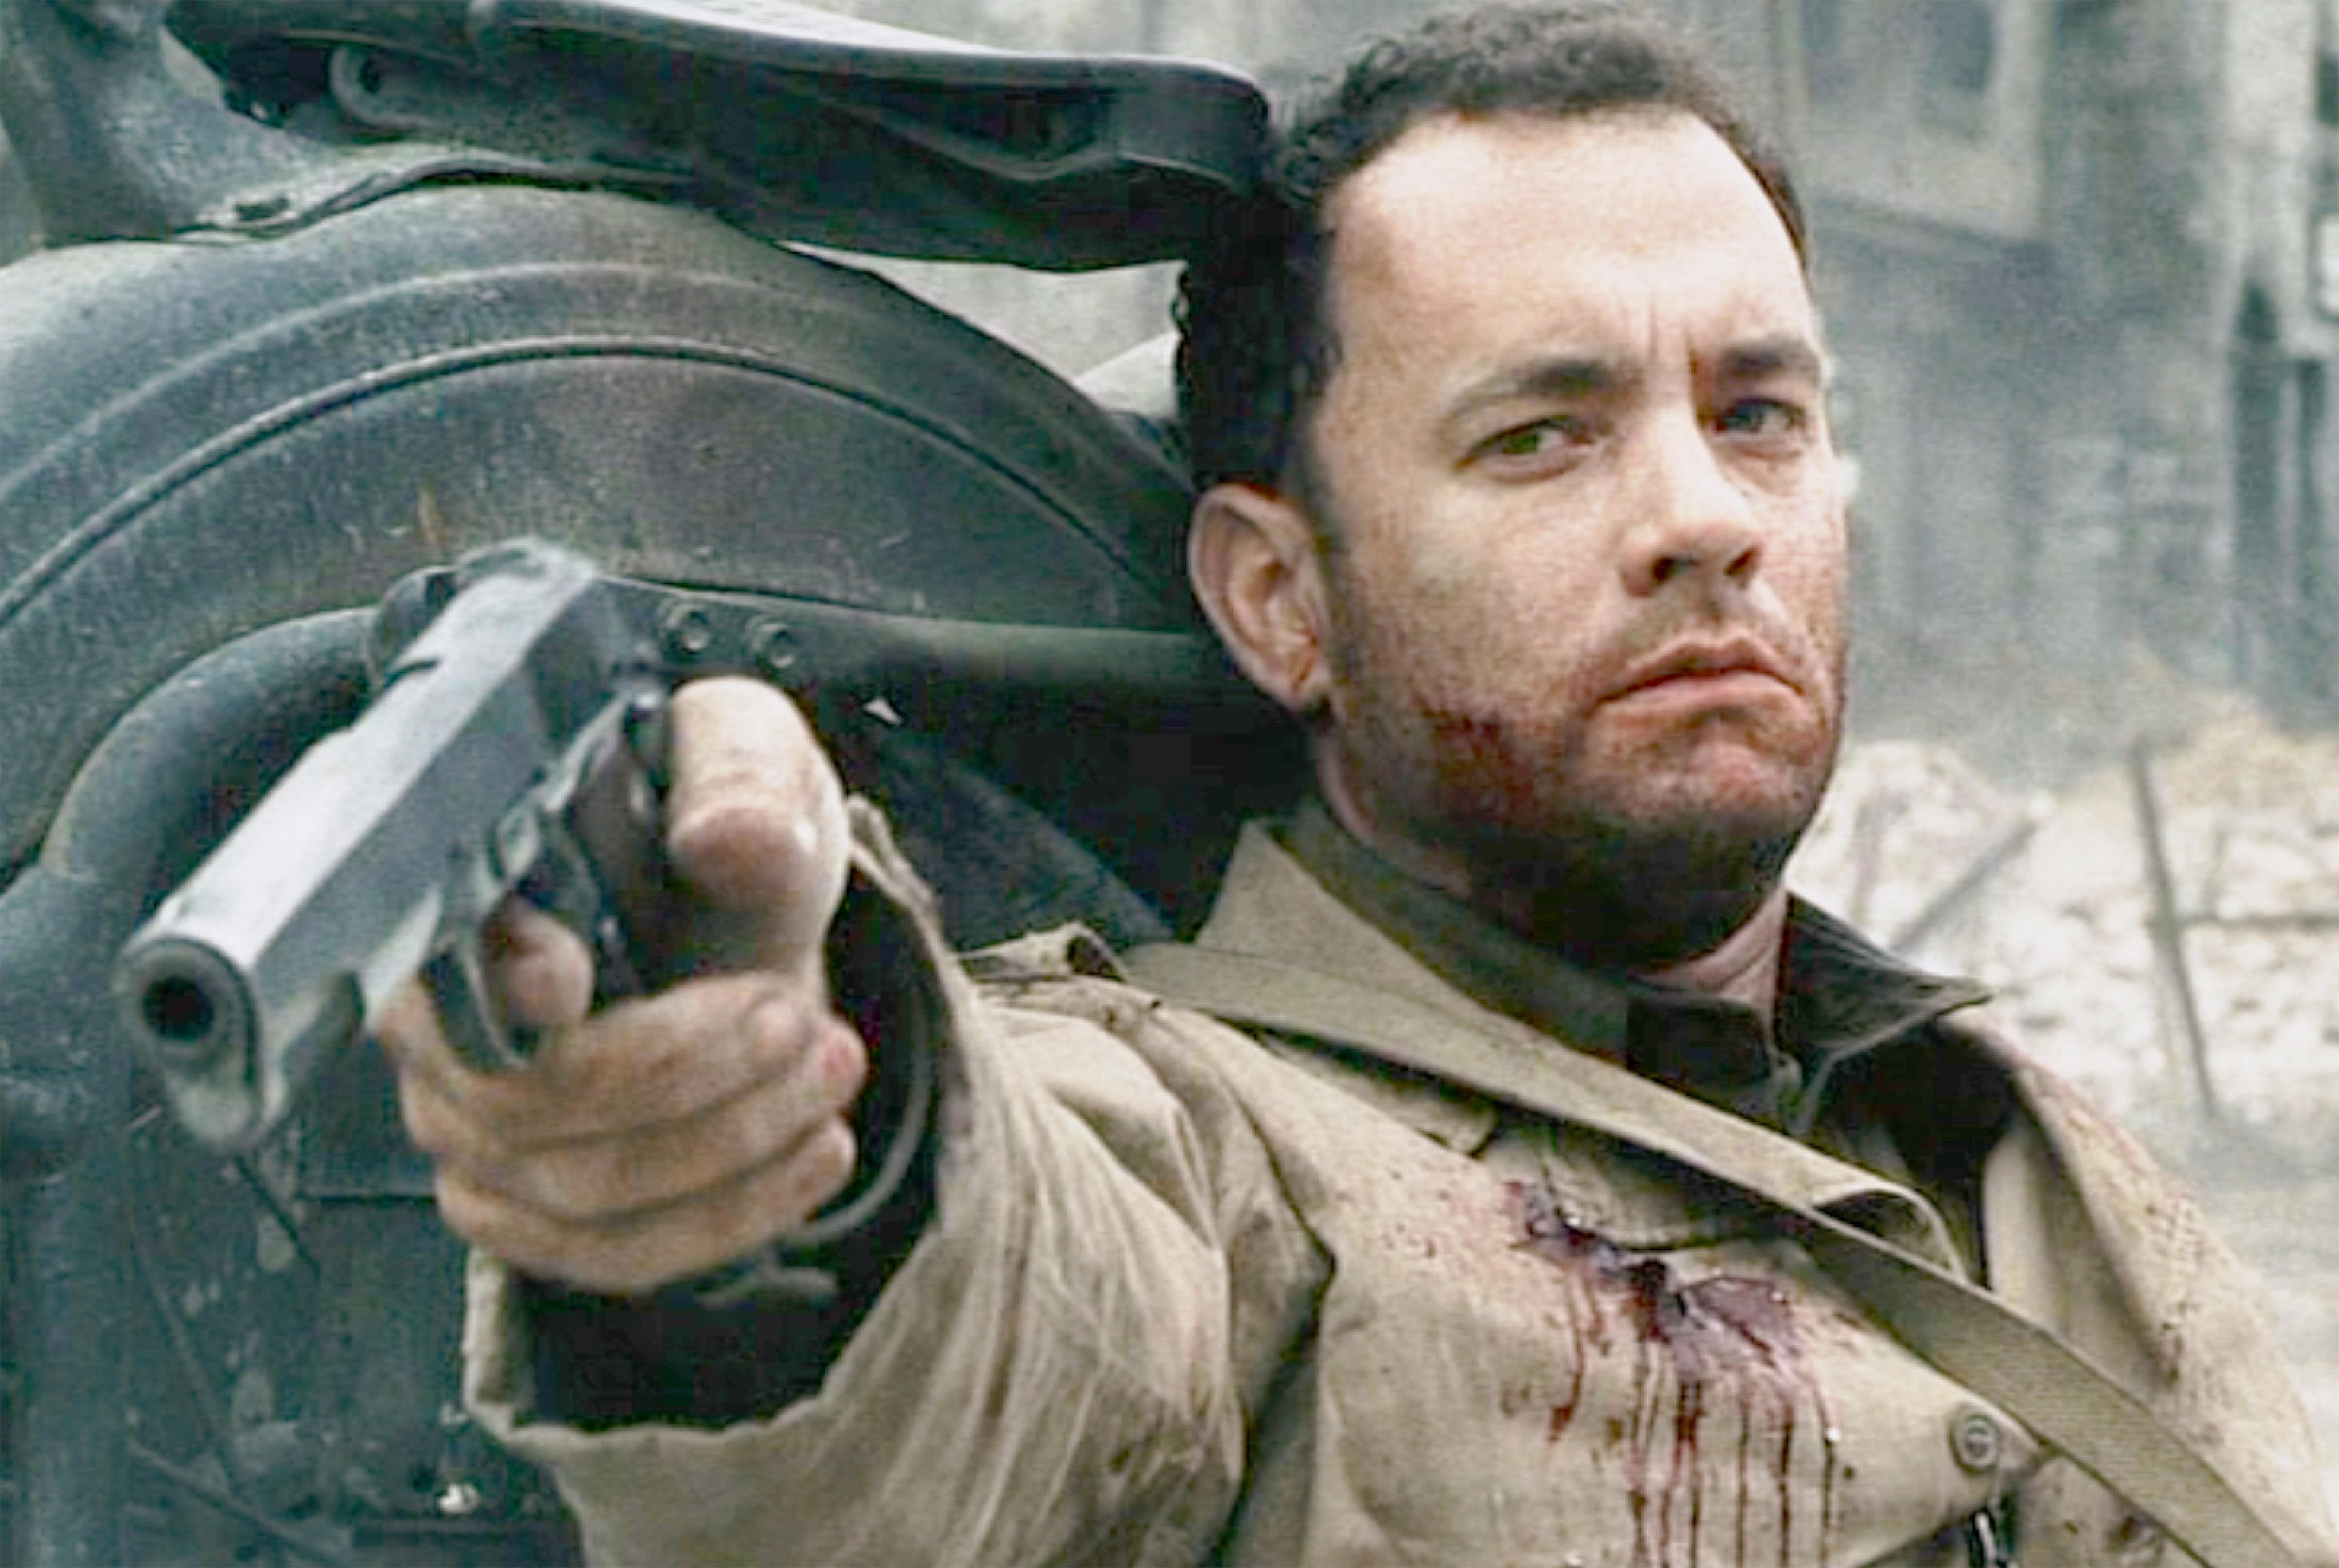 Tom Hanks points a gun